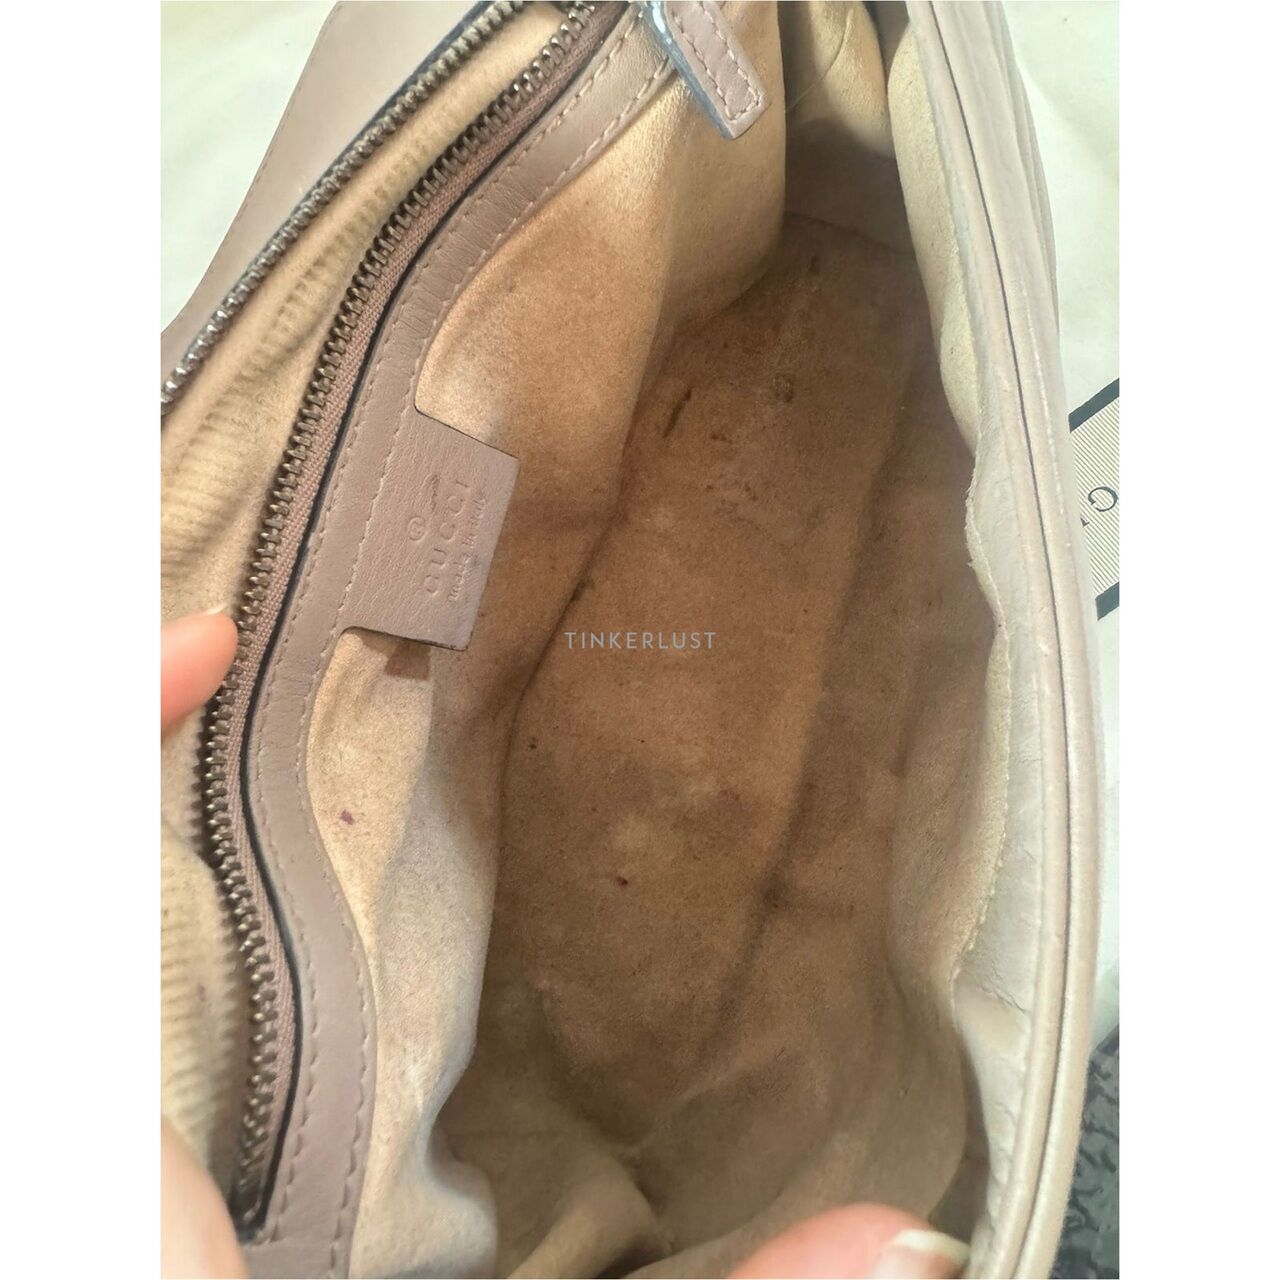 Gucci GG Marmont Matelasse Small Flap 2019 Shoulder Bag